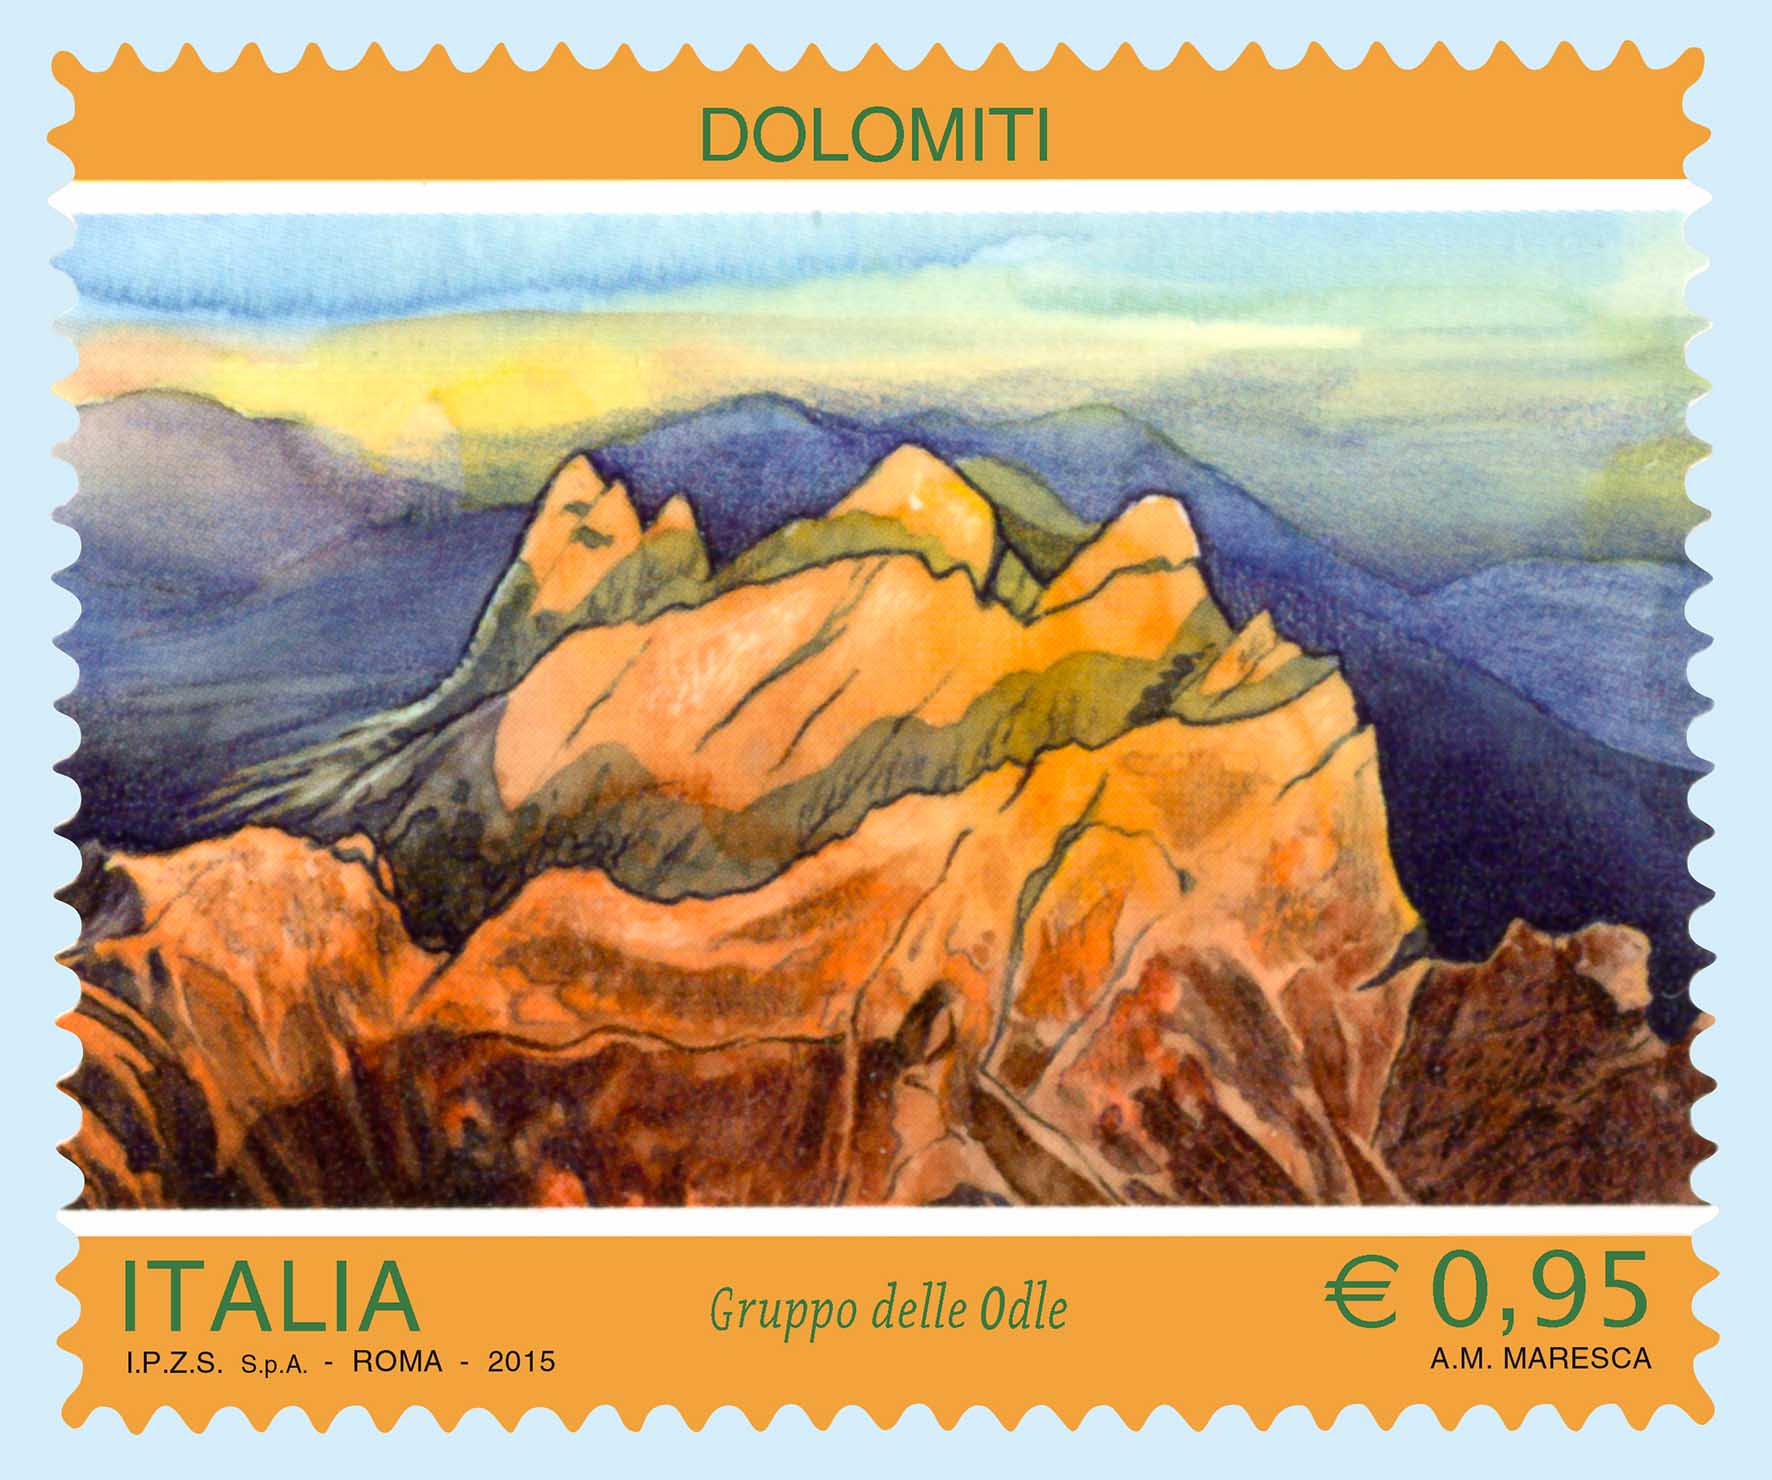 poste italiane francobollo ordinario dolomiti odle